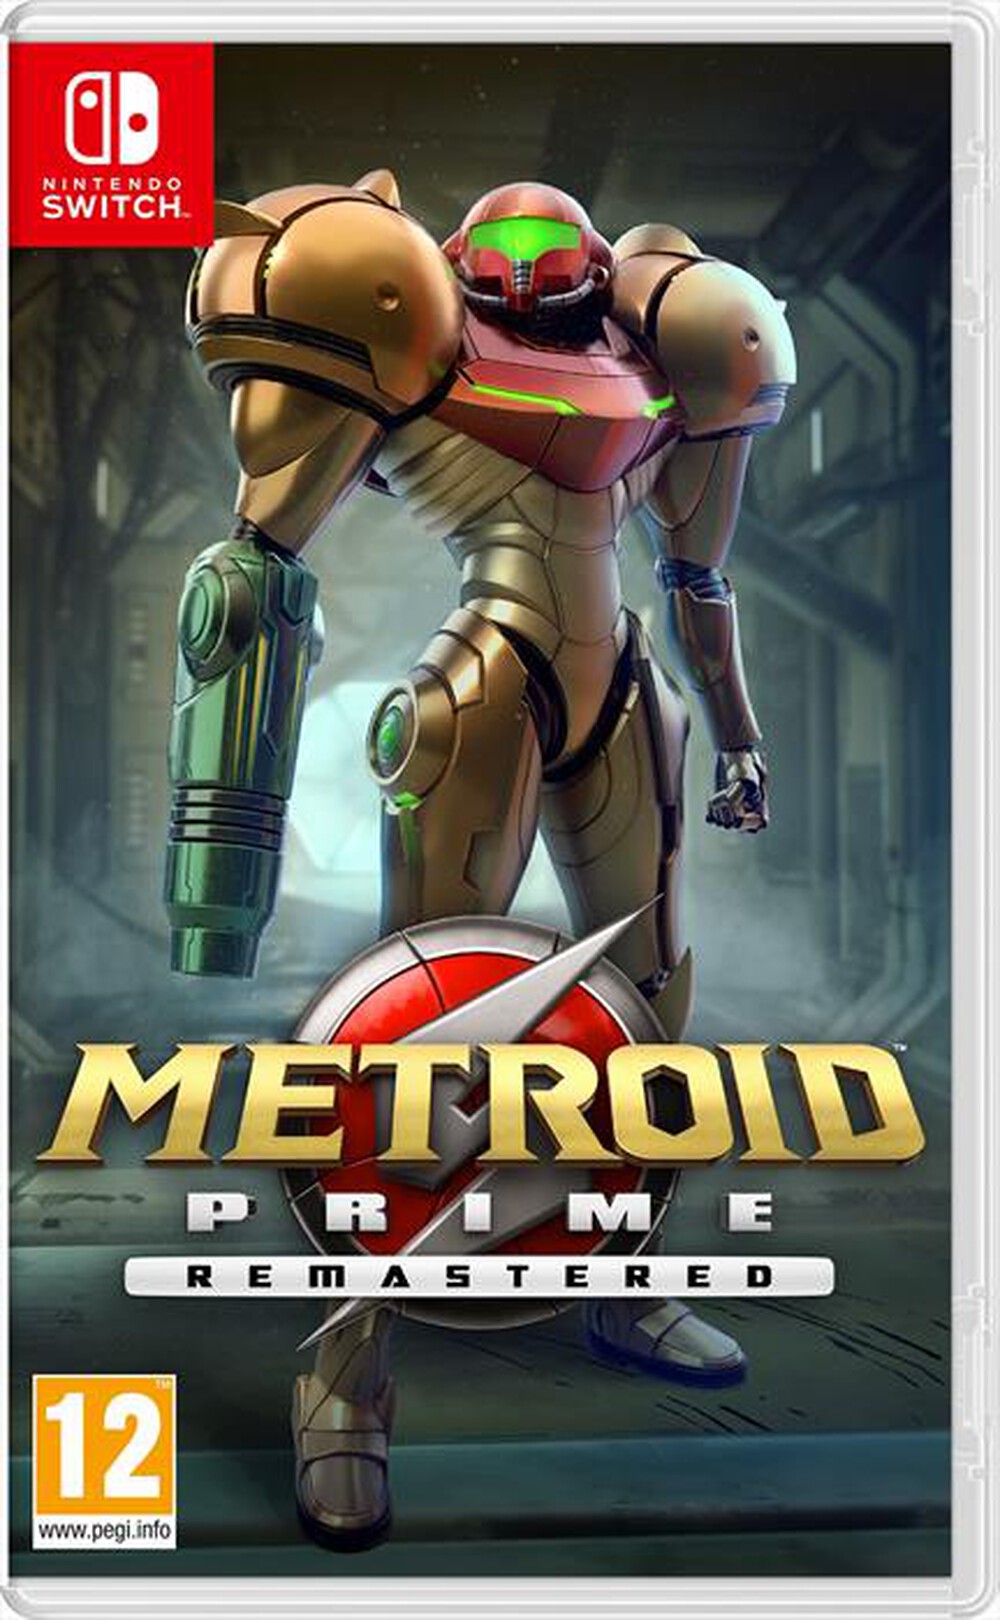 "NINTENDO - Metroid Prime Remastered"